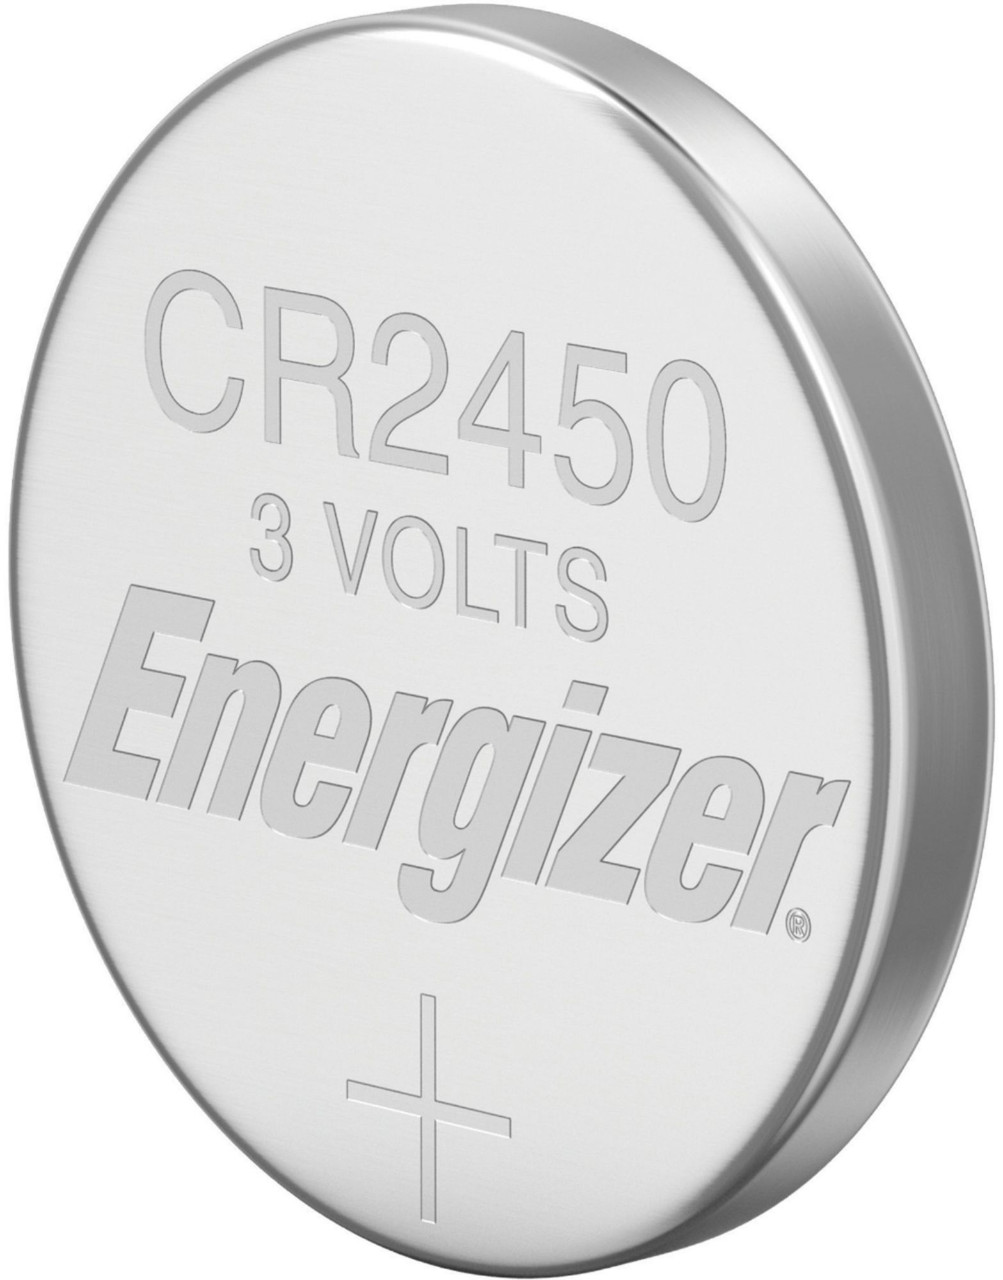 Energizer - 2450 3-Volt Lithium Battery